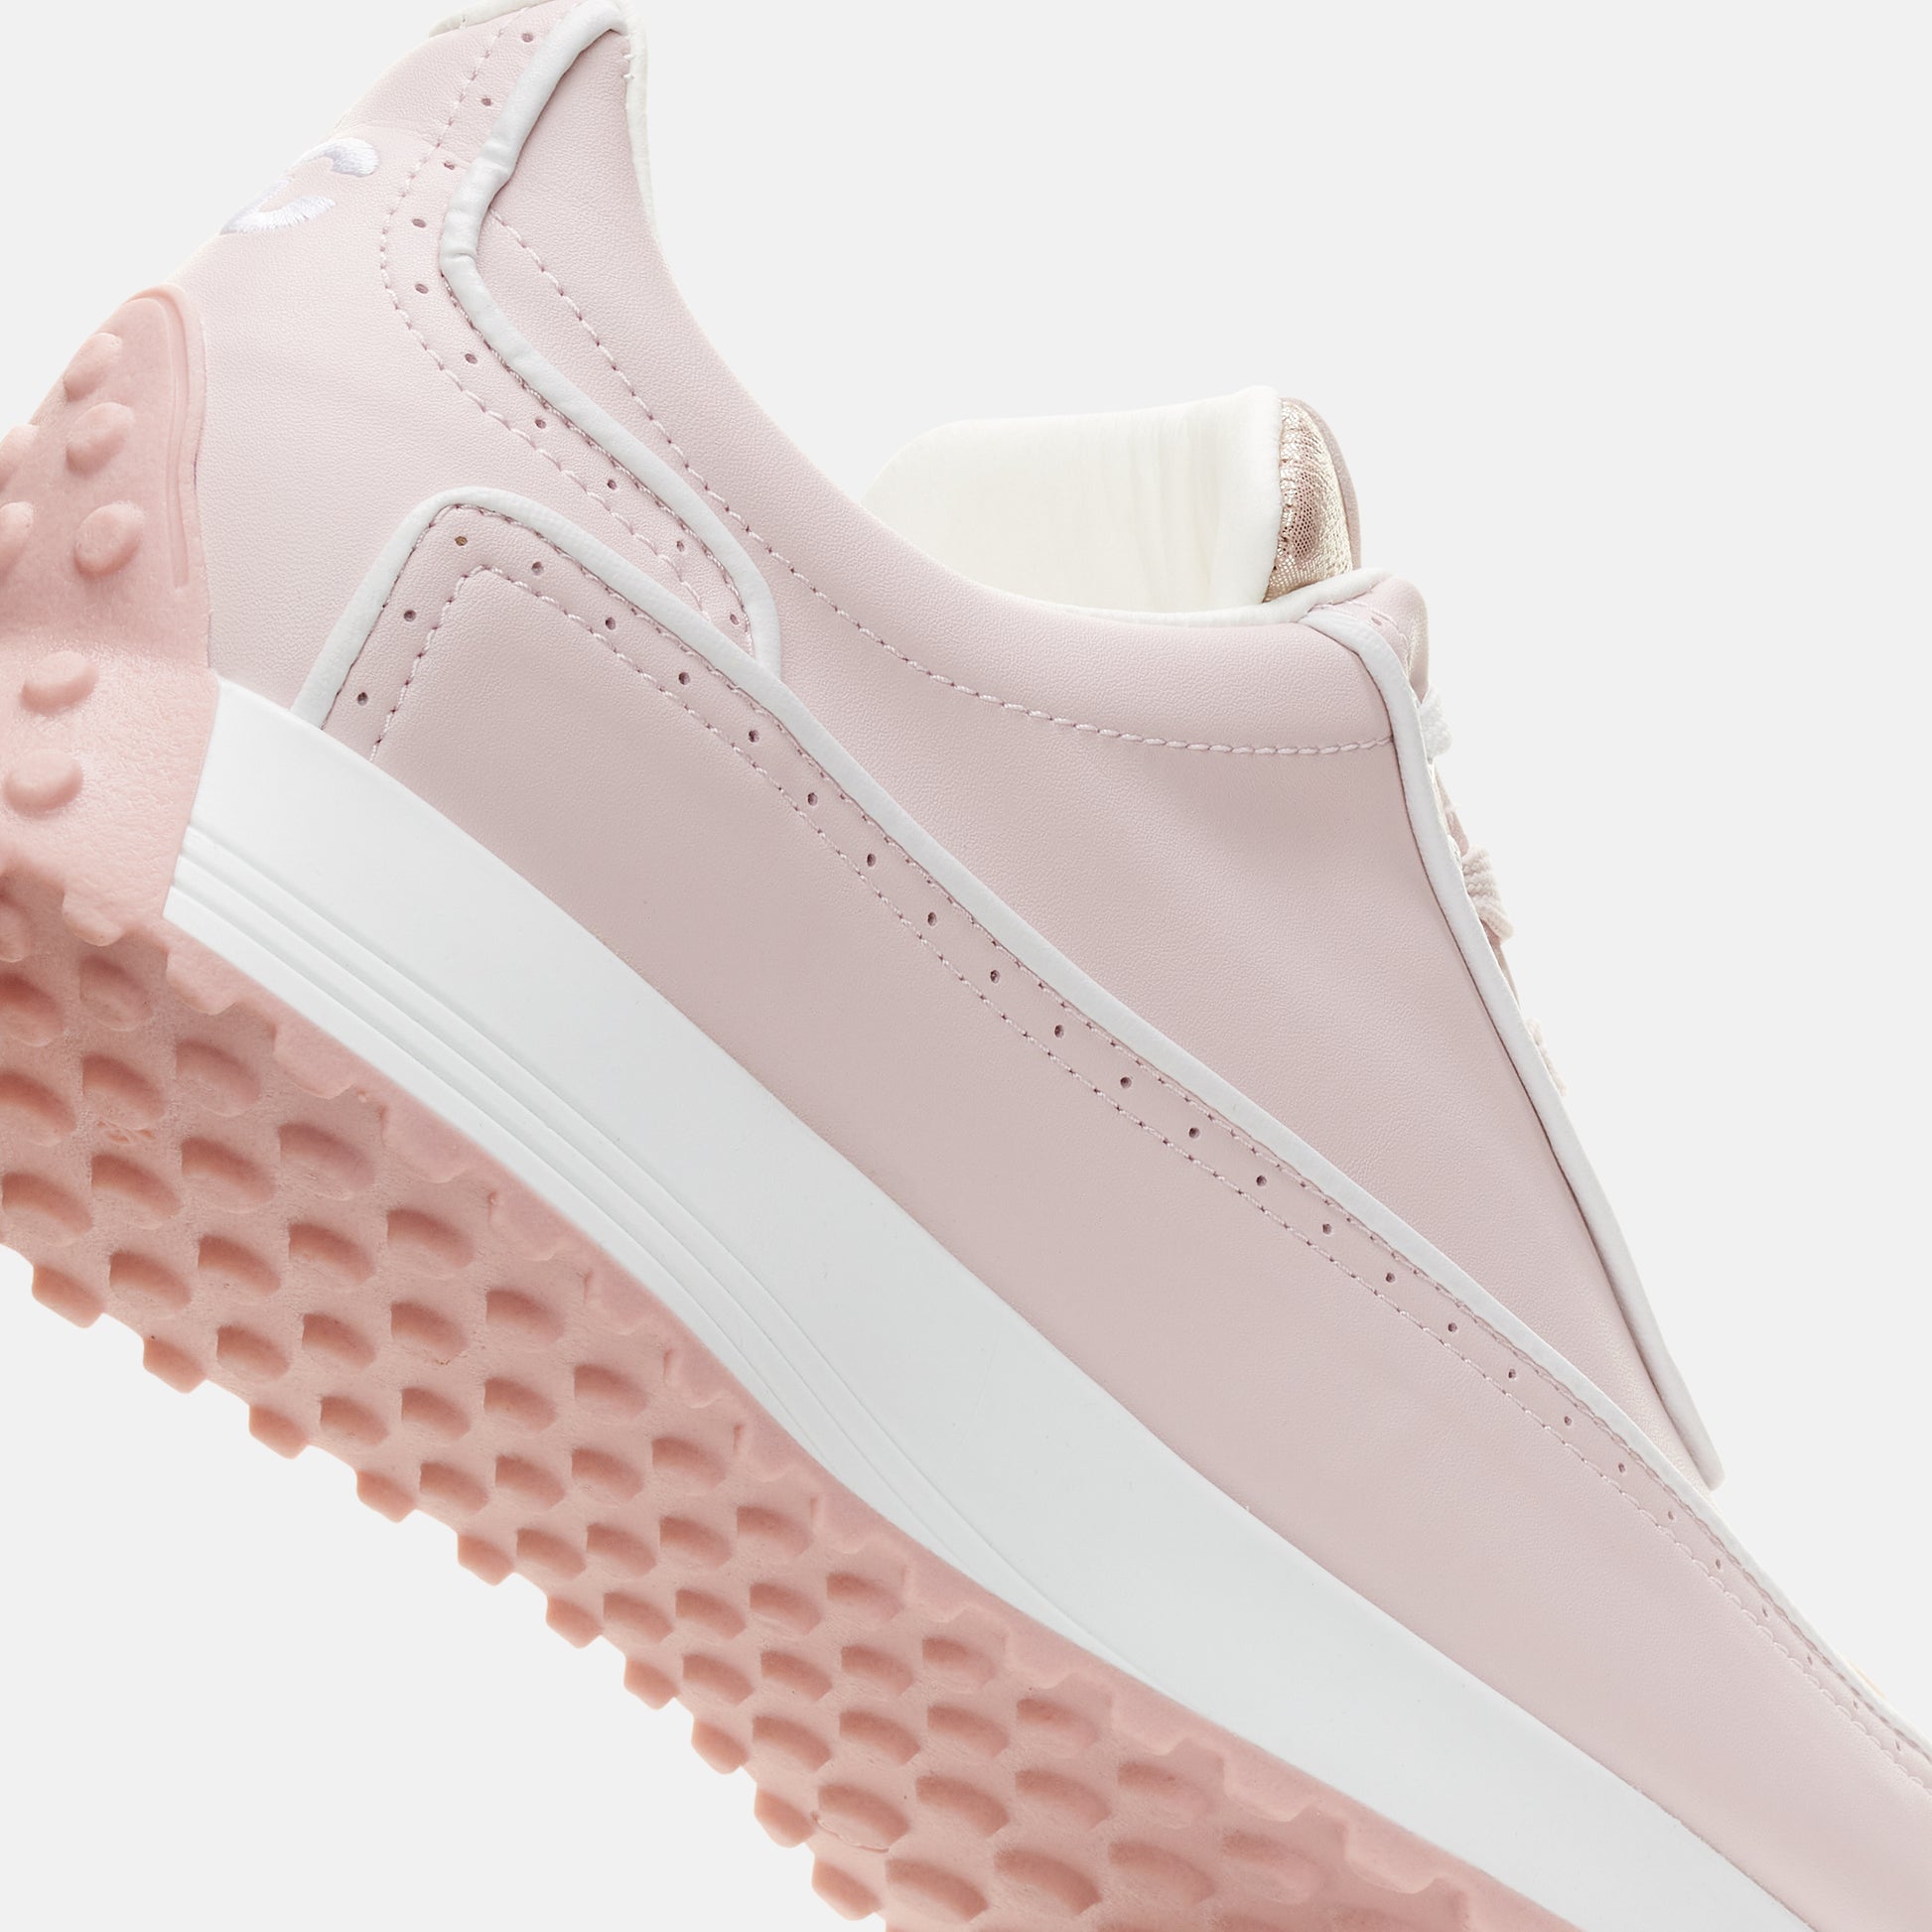 Alexa - pink Women's Golf Shoes Duca del Cosma Waterproof best golf shoe for the golf course  